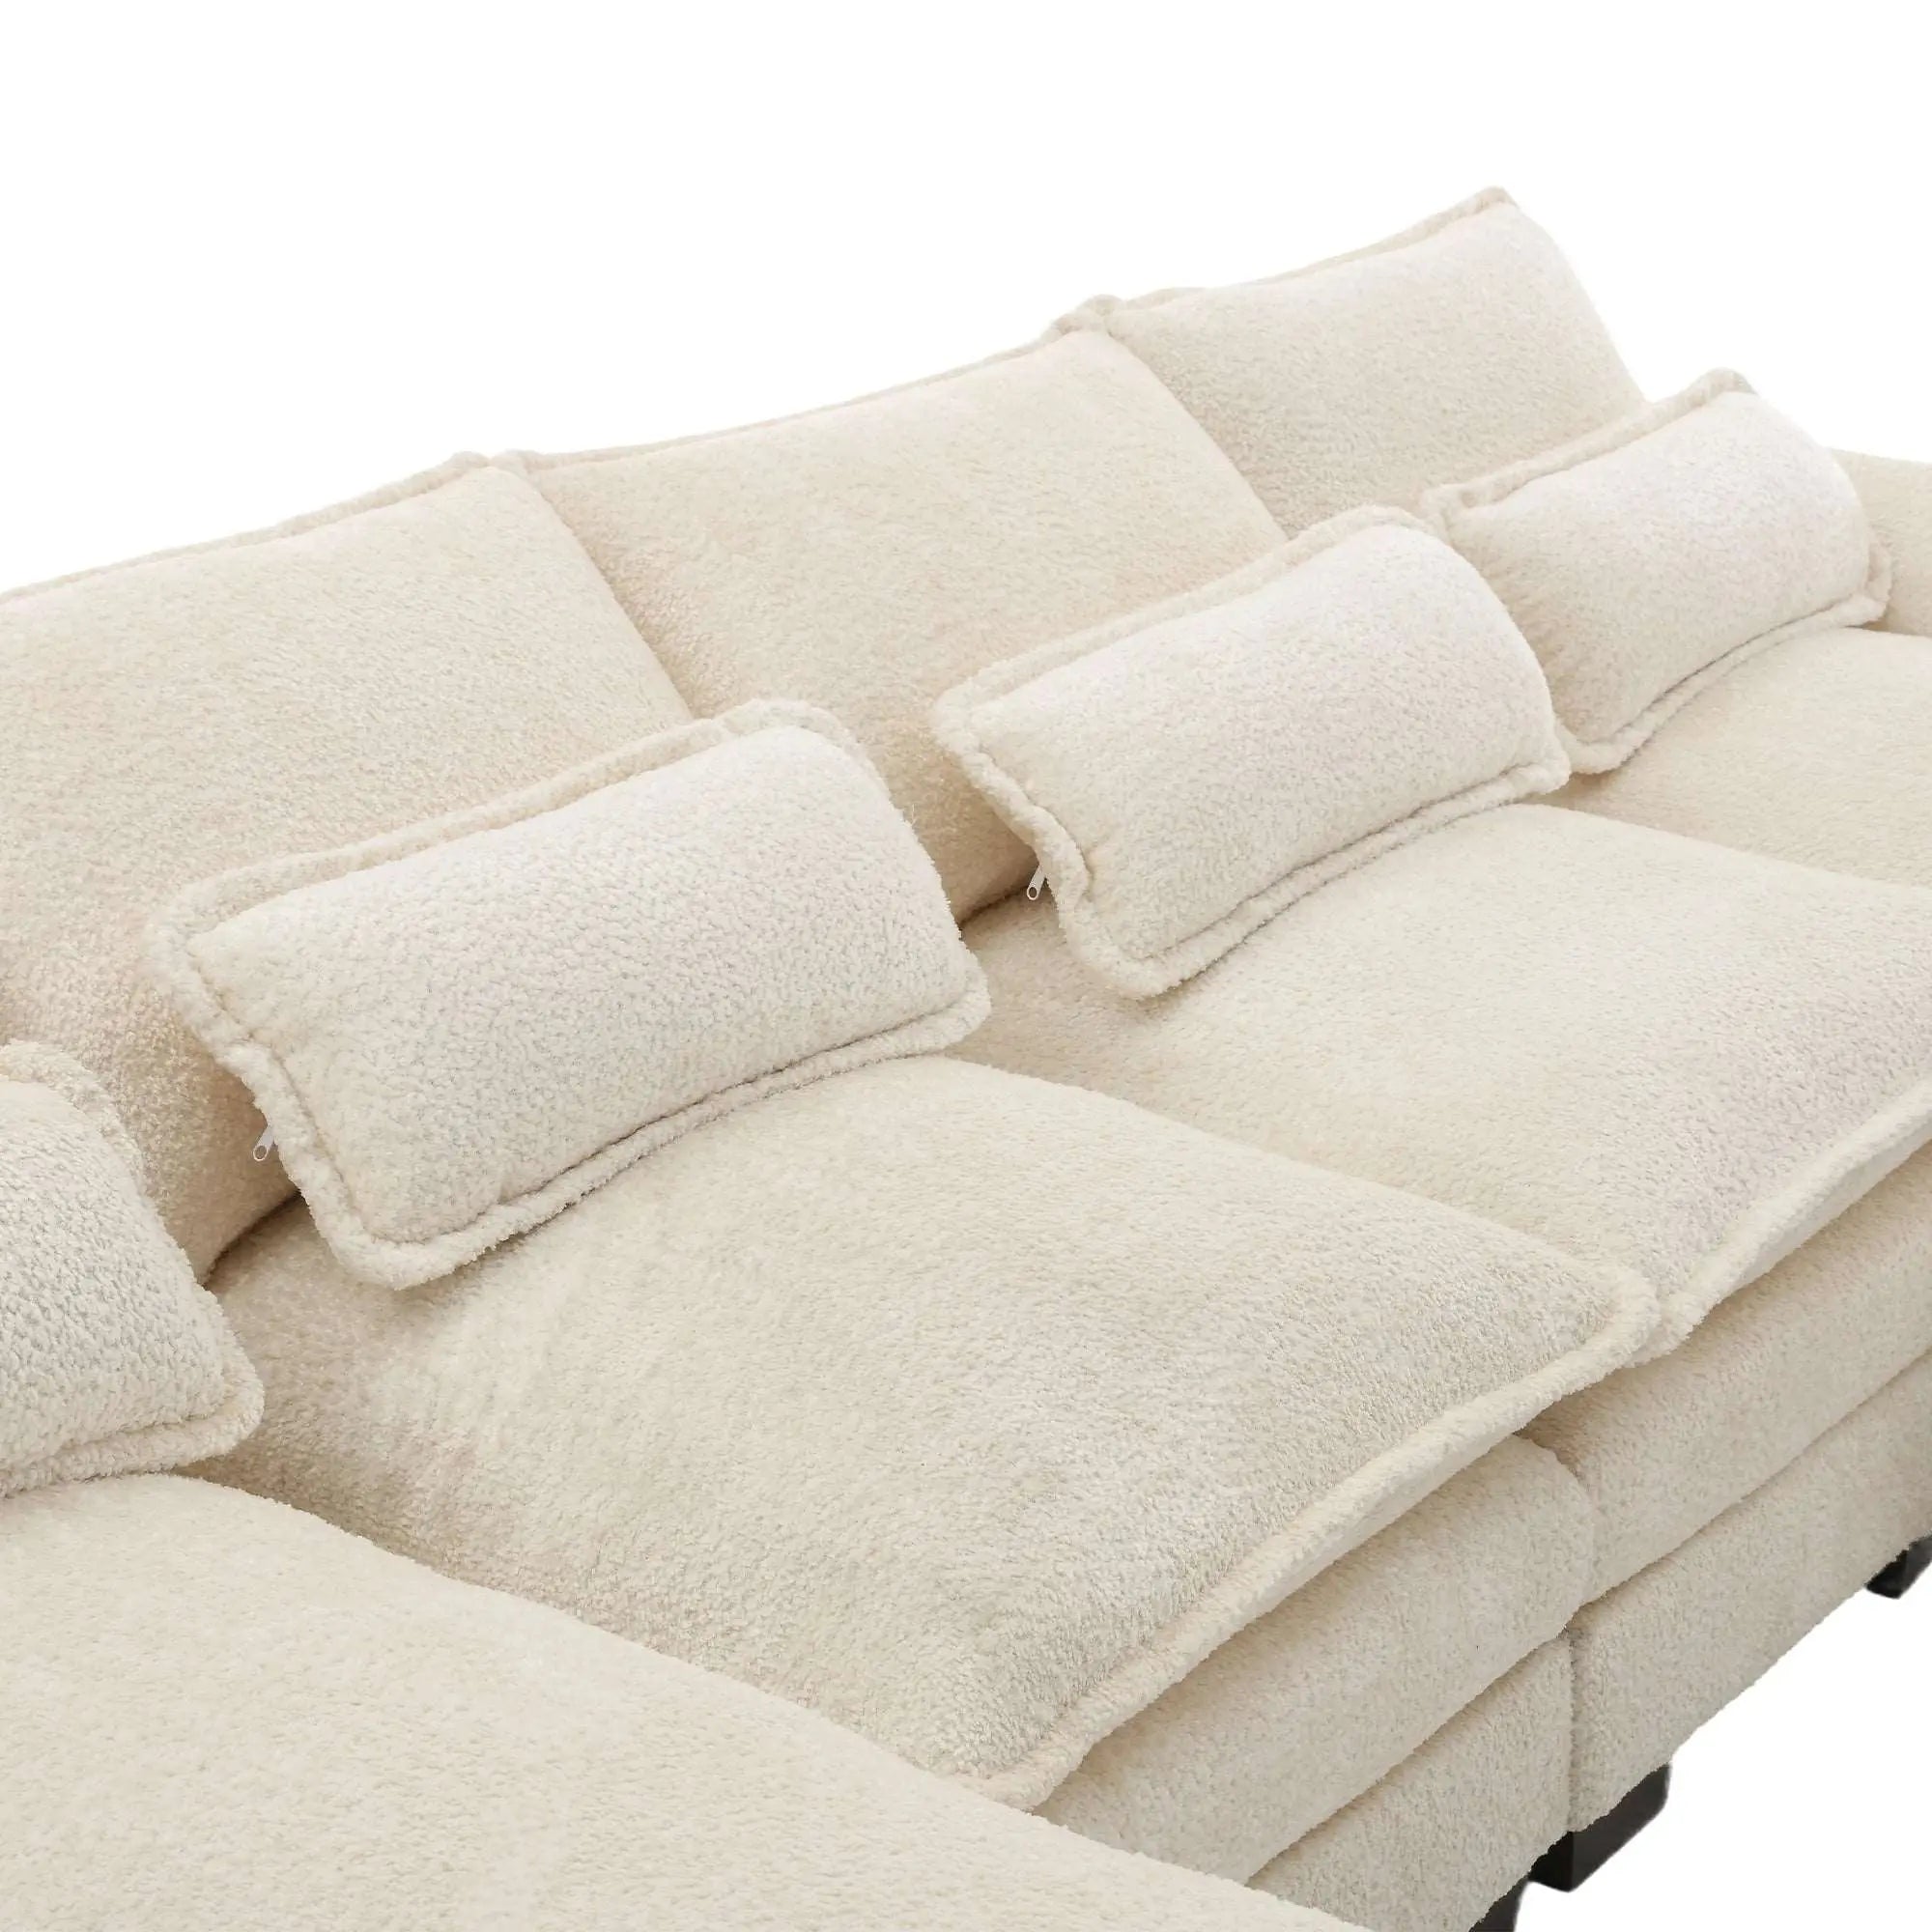 Bellemave 110.62" Modern Large Chenille Fabric U-Shape Sectional Sofa